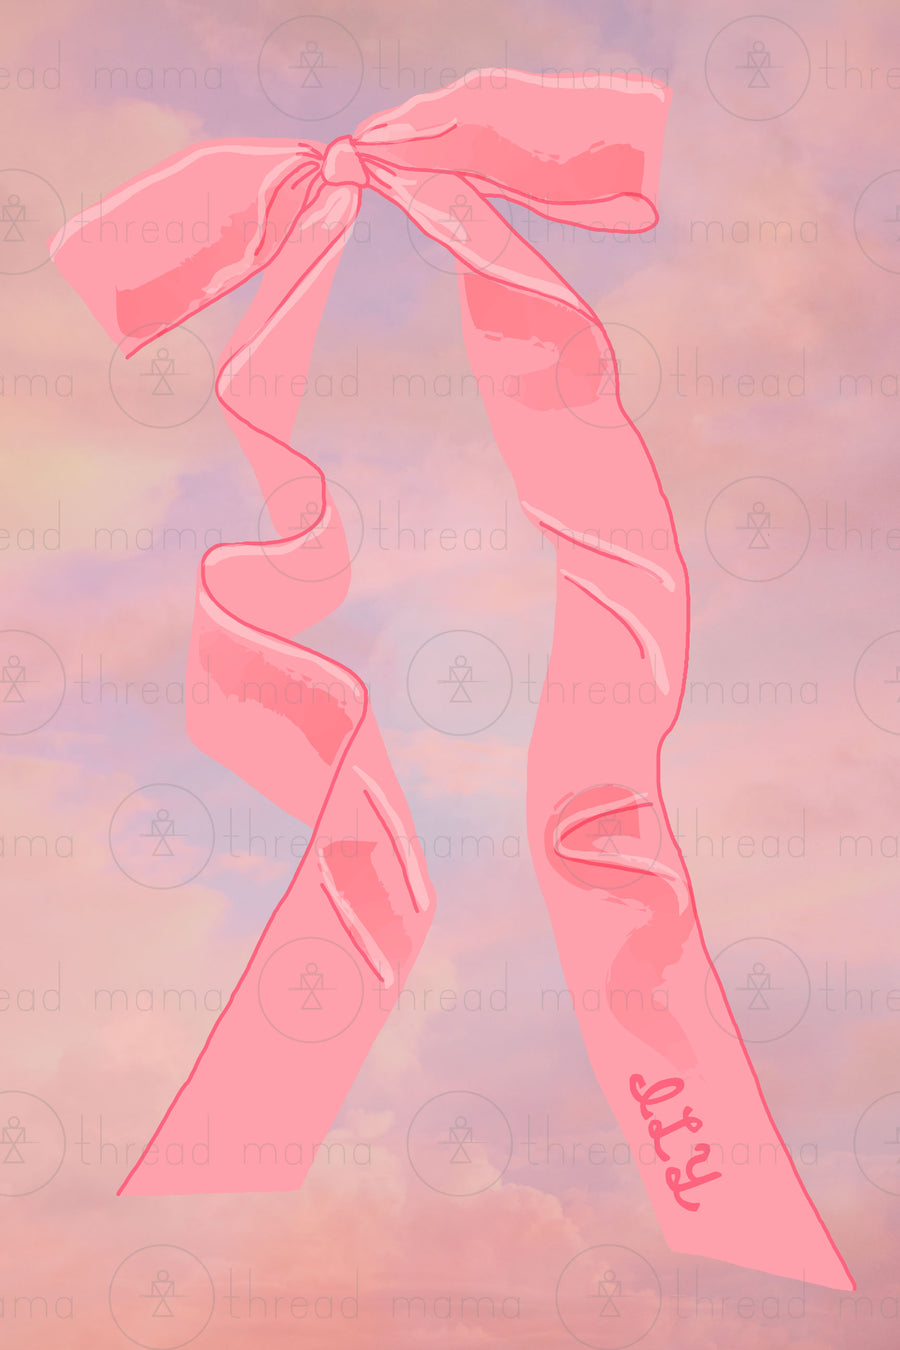 Pink Ribbon - Set